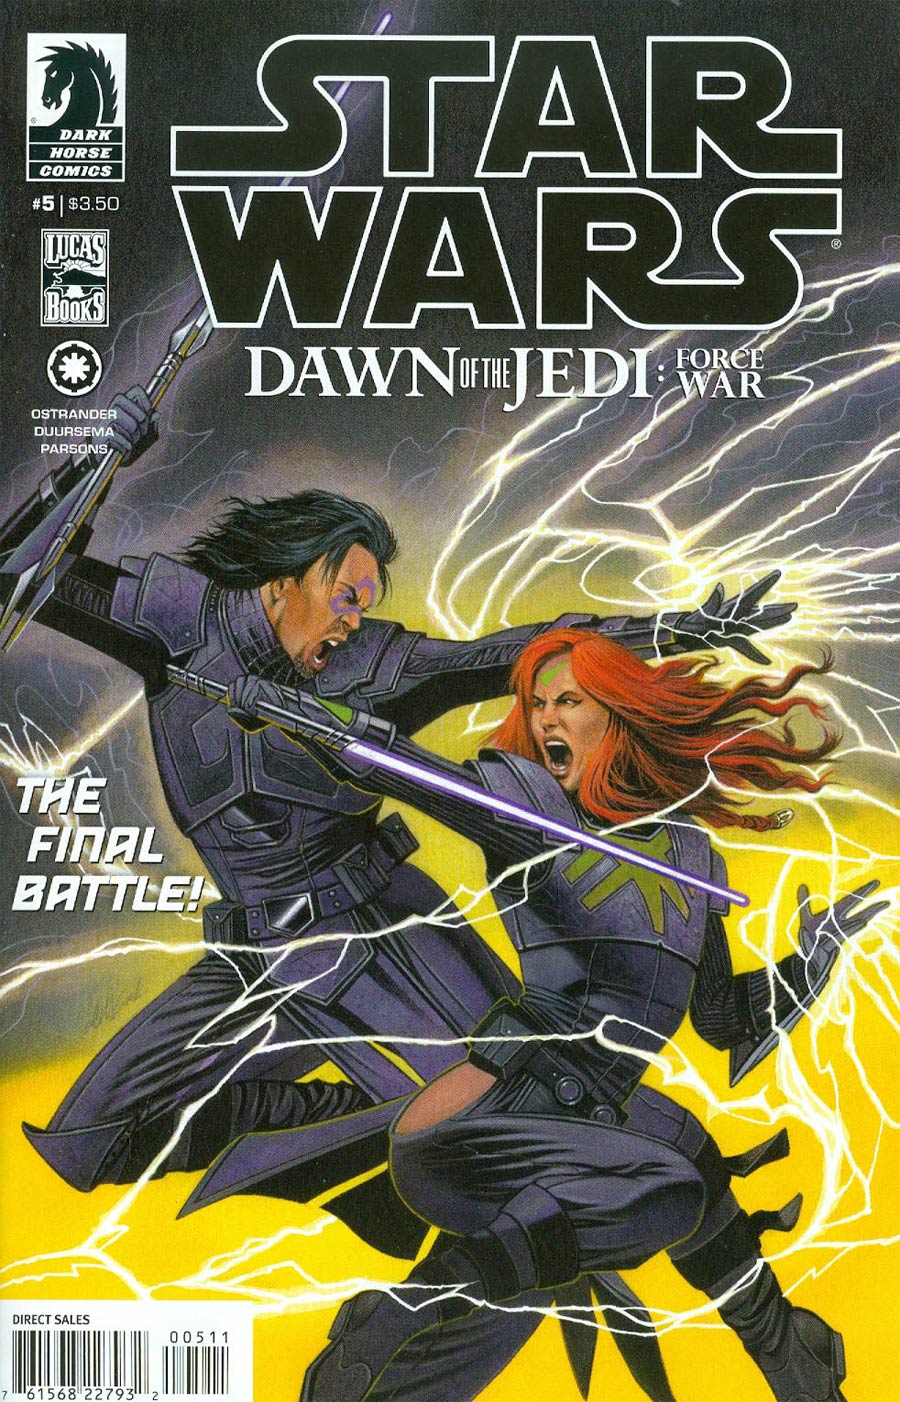 Star Wars Dawn Of The Jedi Force War #5